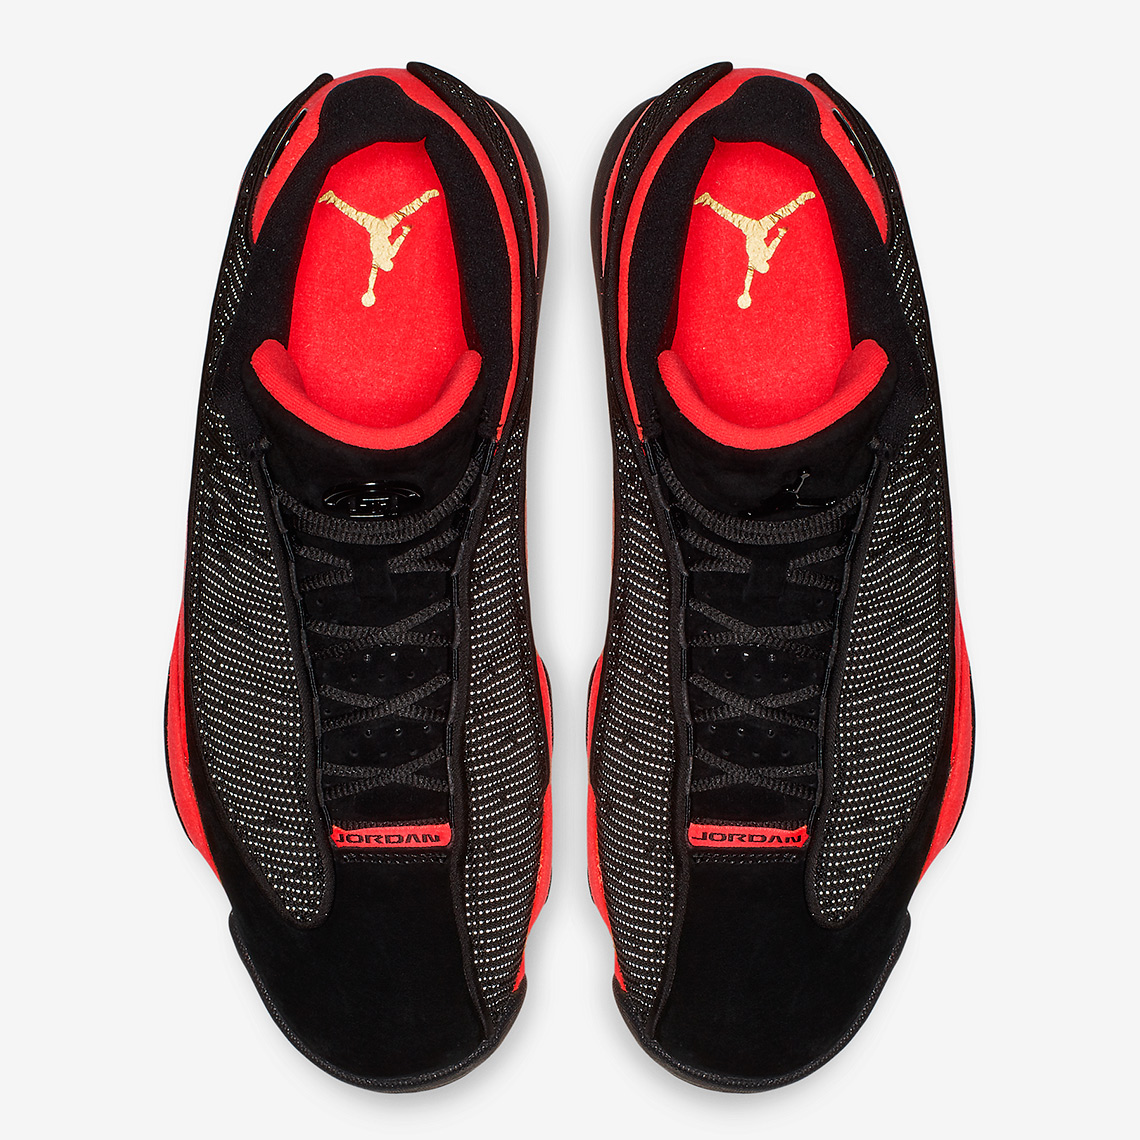 CLOT Air Jordan 13 Low Infrared First Look + Info | SneakerNews.com